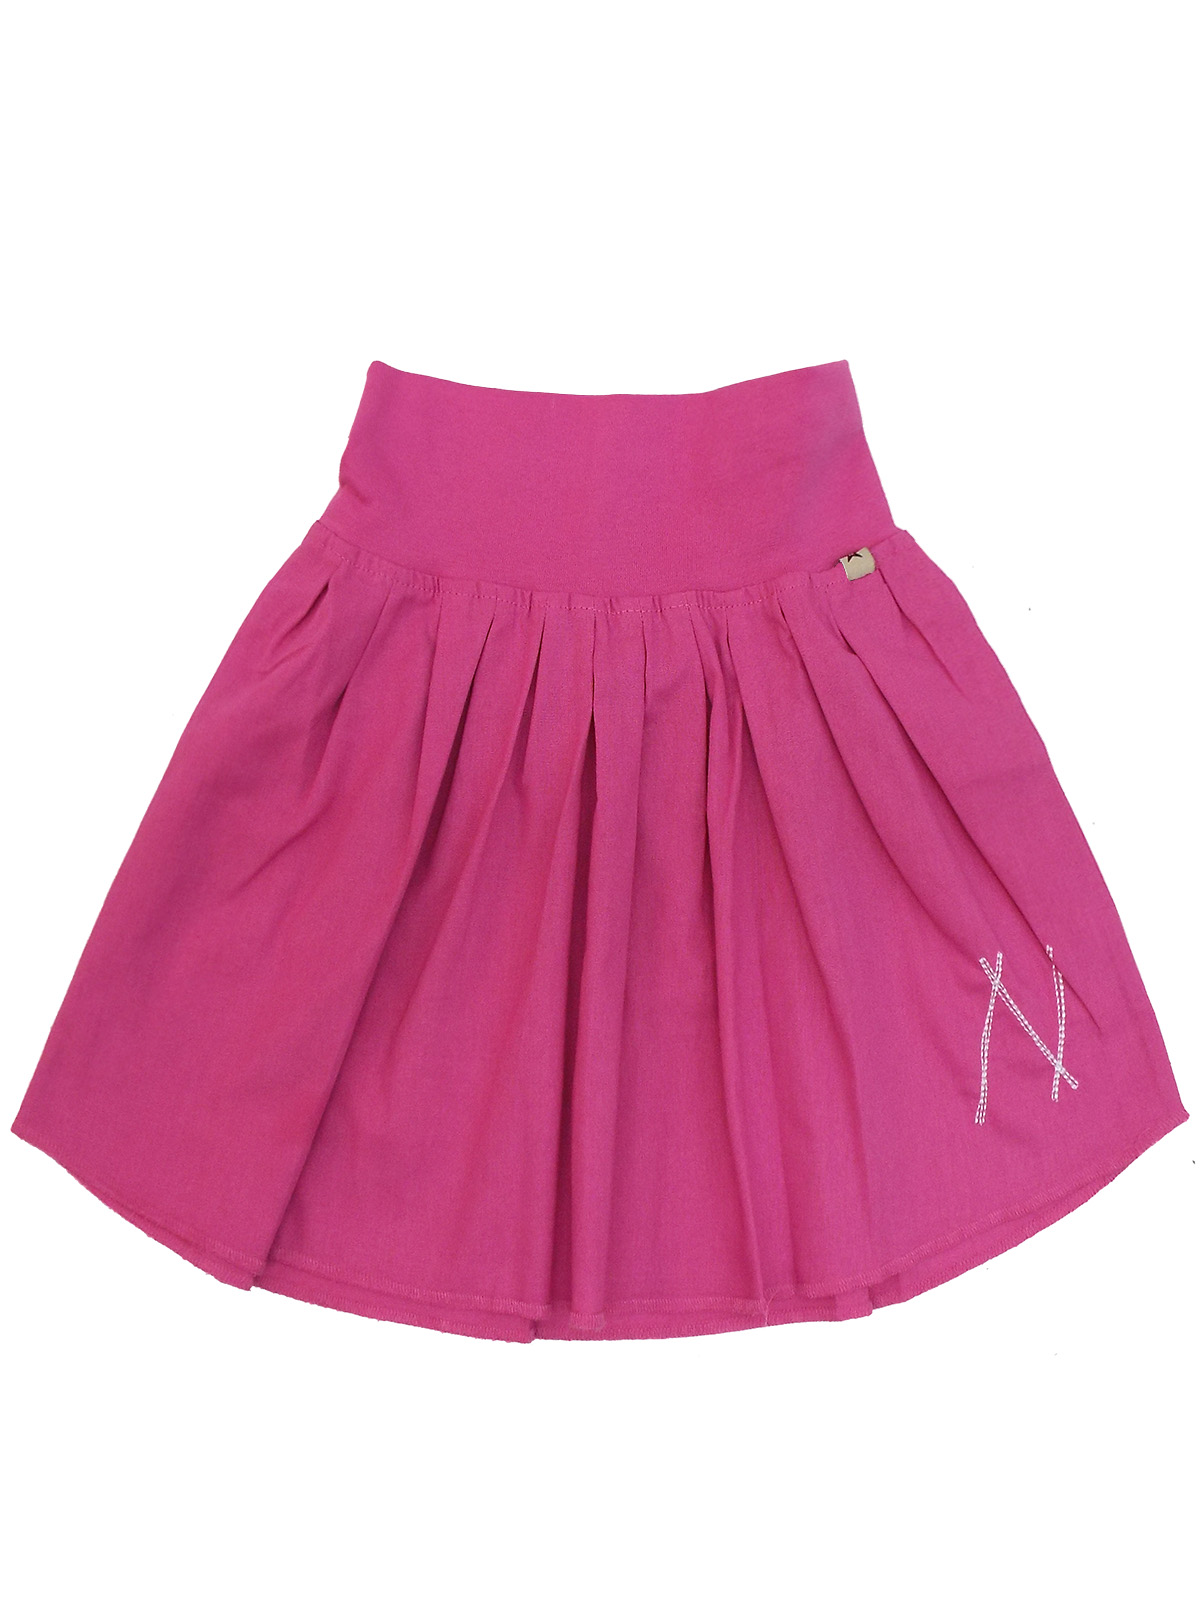 Nova Star - - Nova Star PINK Girls Pure Cotton Pleated Skirt - Age 4/6Y ...